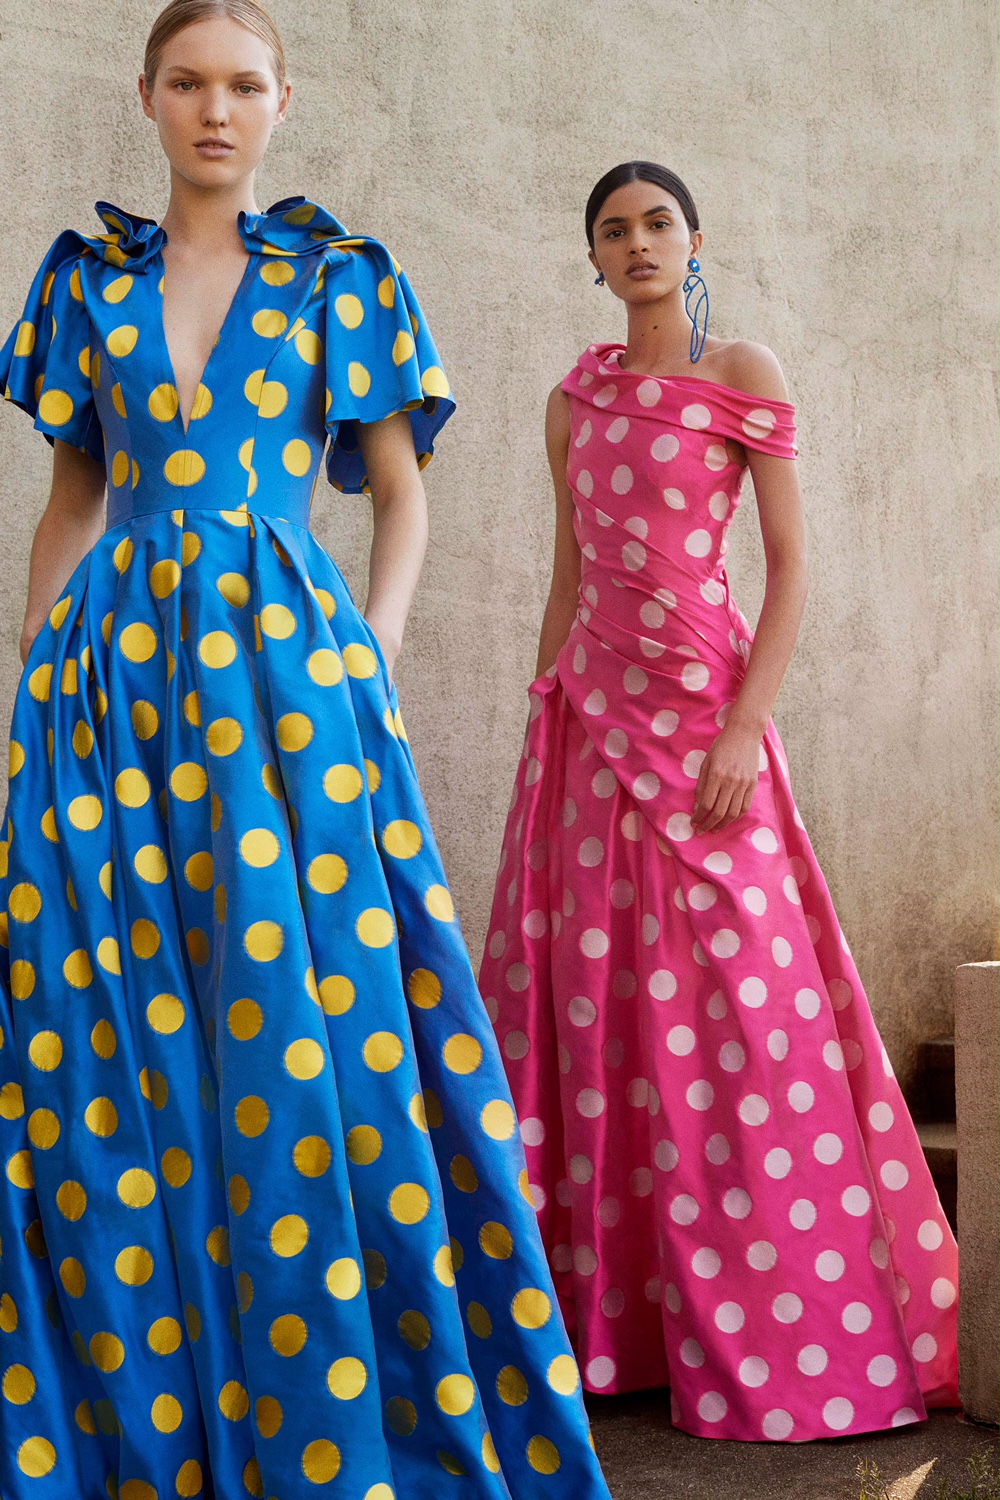 Spotlight on Carolina Herrera Chic Polka-Dot Dresses